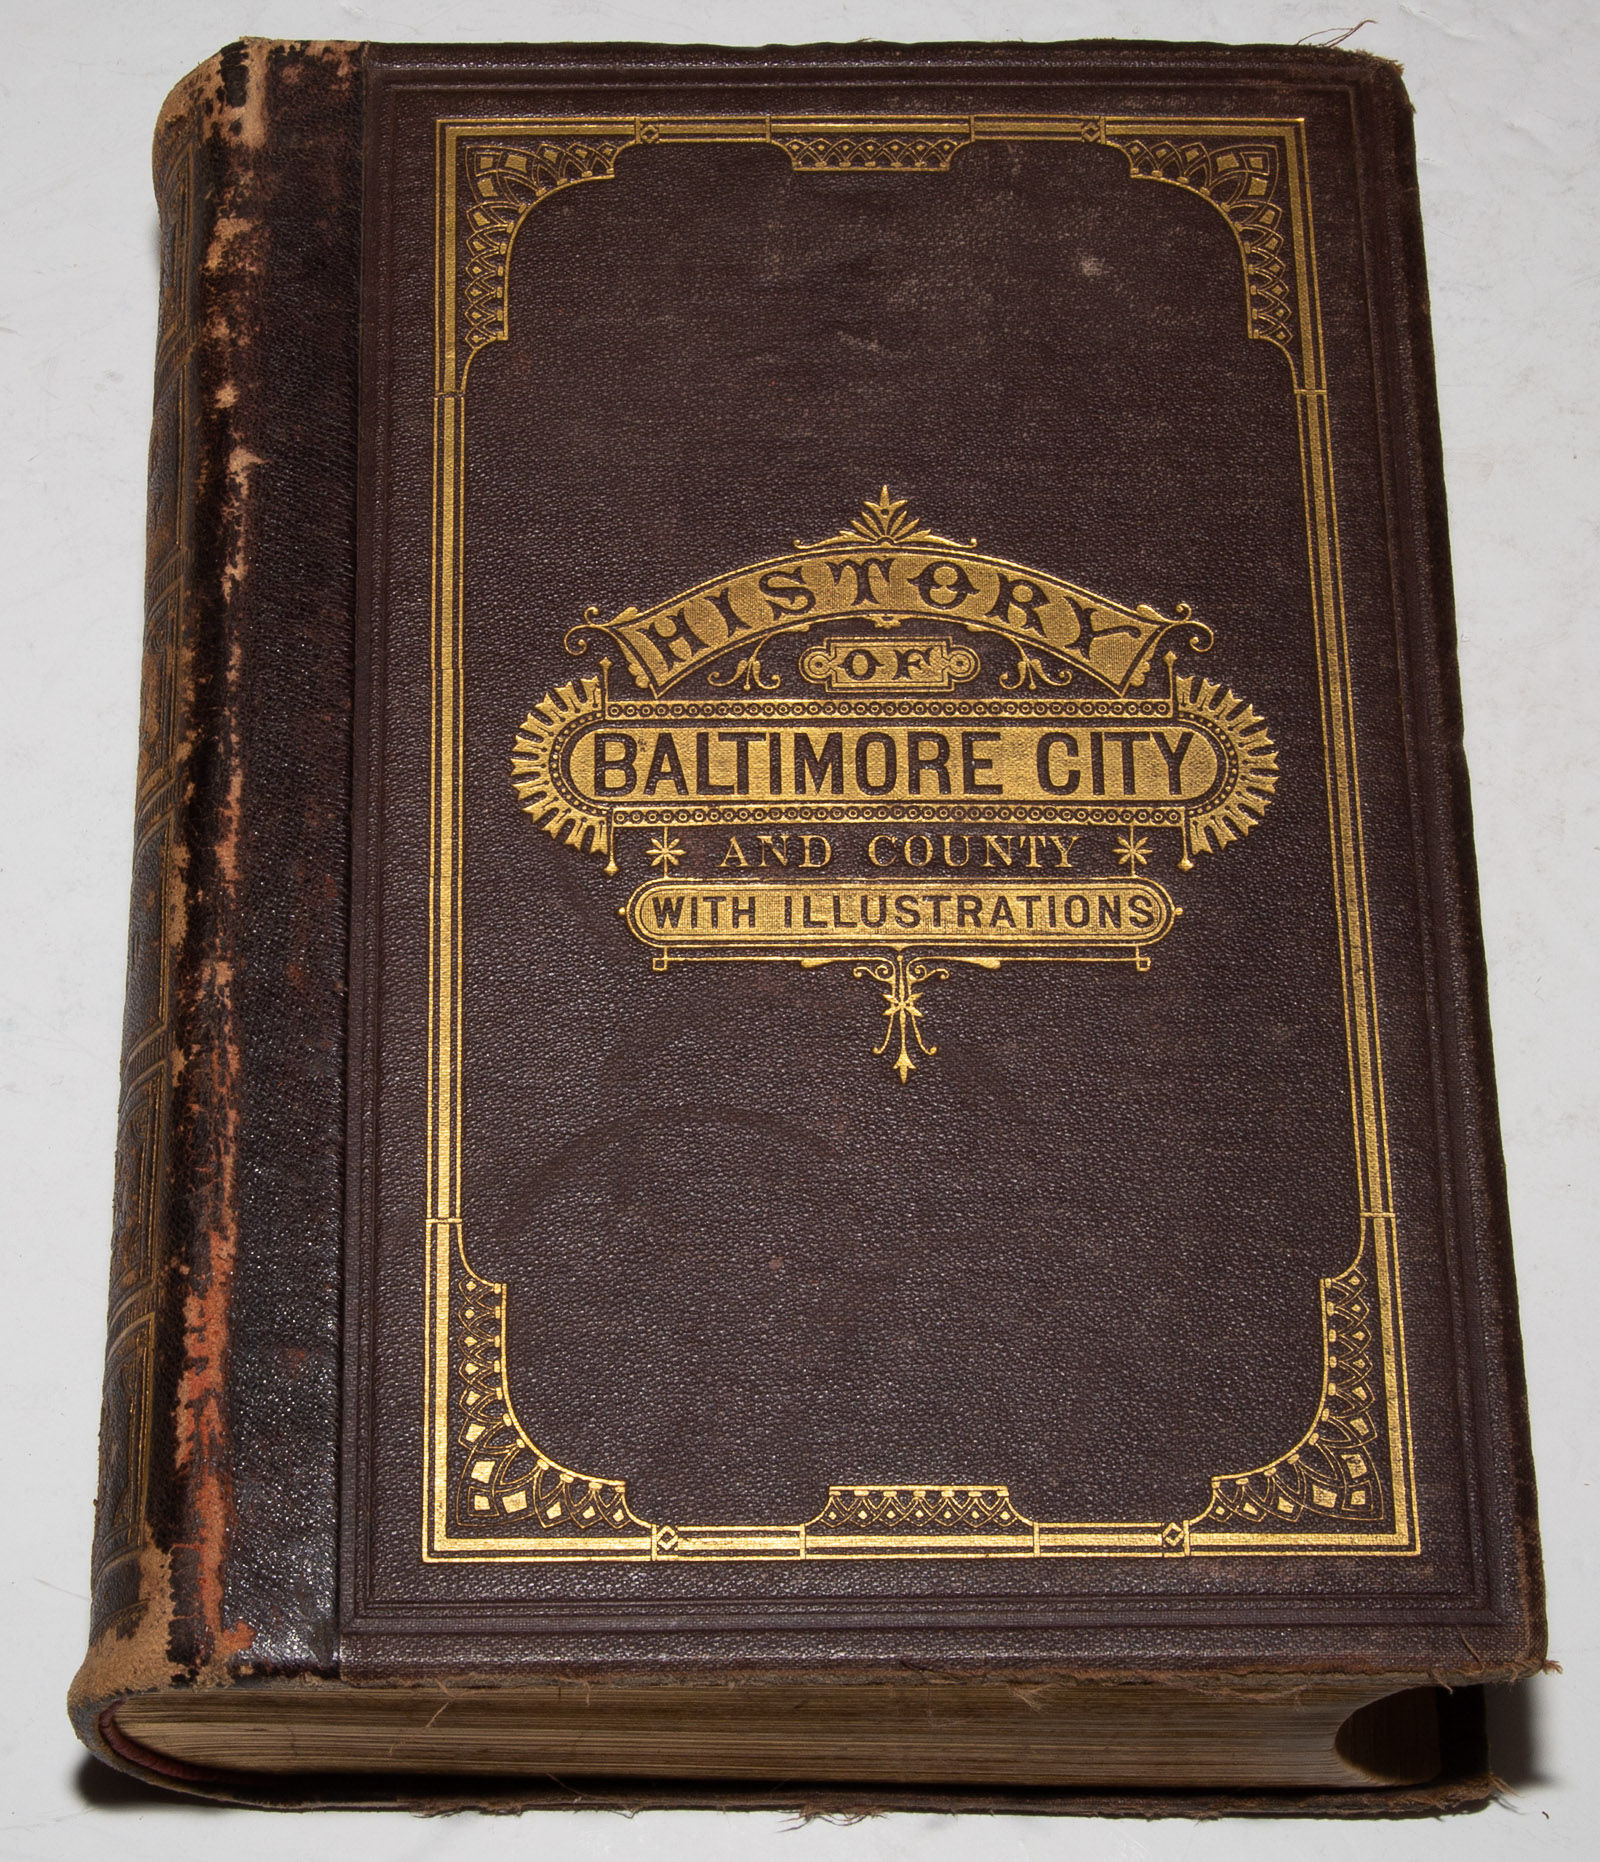 RARE BOOK: SCHARF, HISTORY OF BALTIMORE